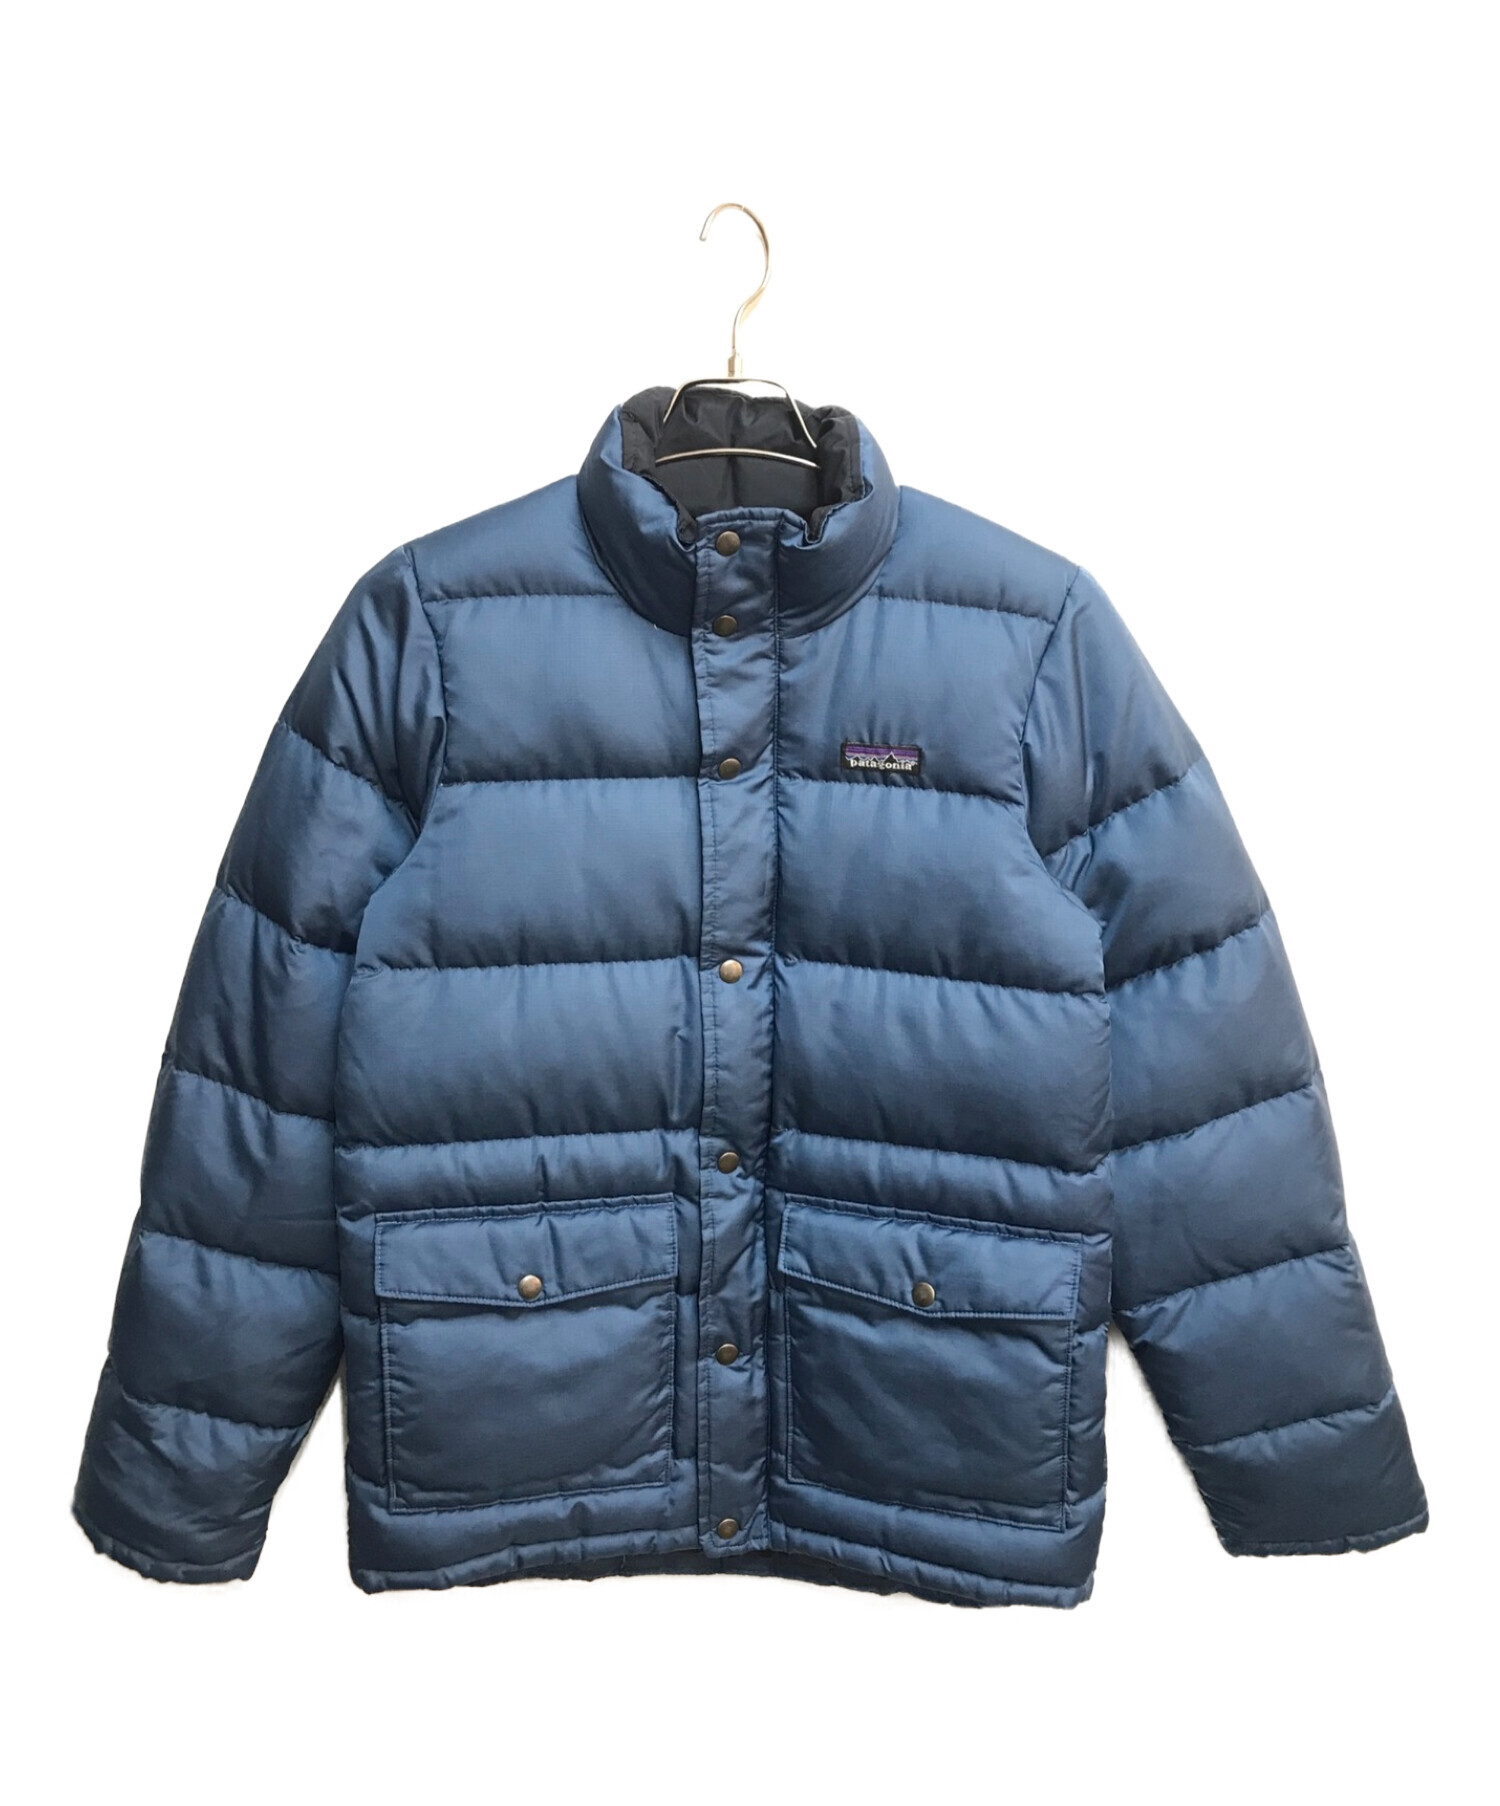 Patagonia (パタゴニア) スリングショットダウンジャケット ブルー サイズ:XS